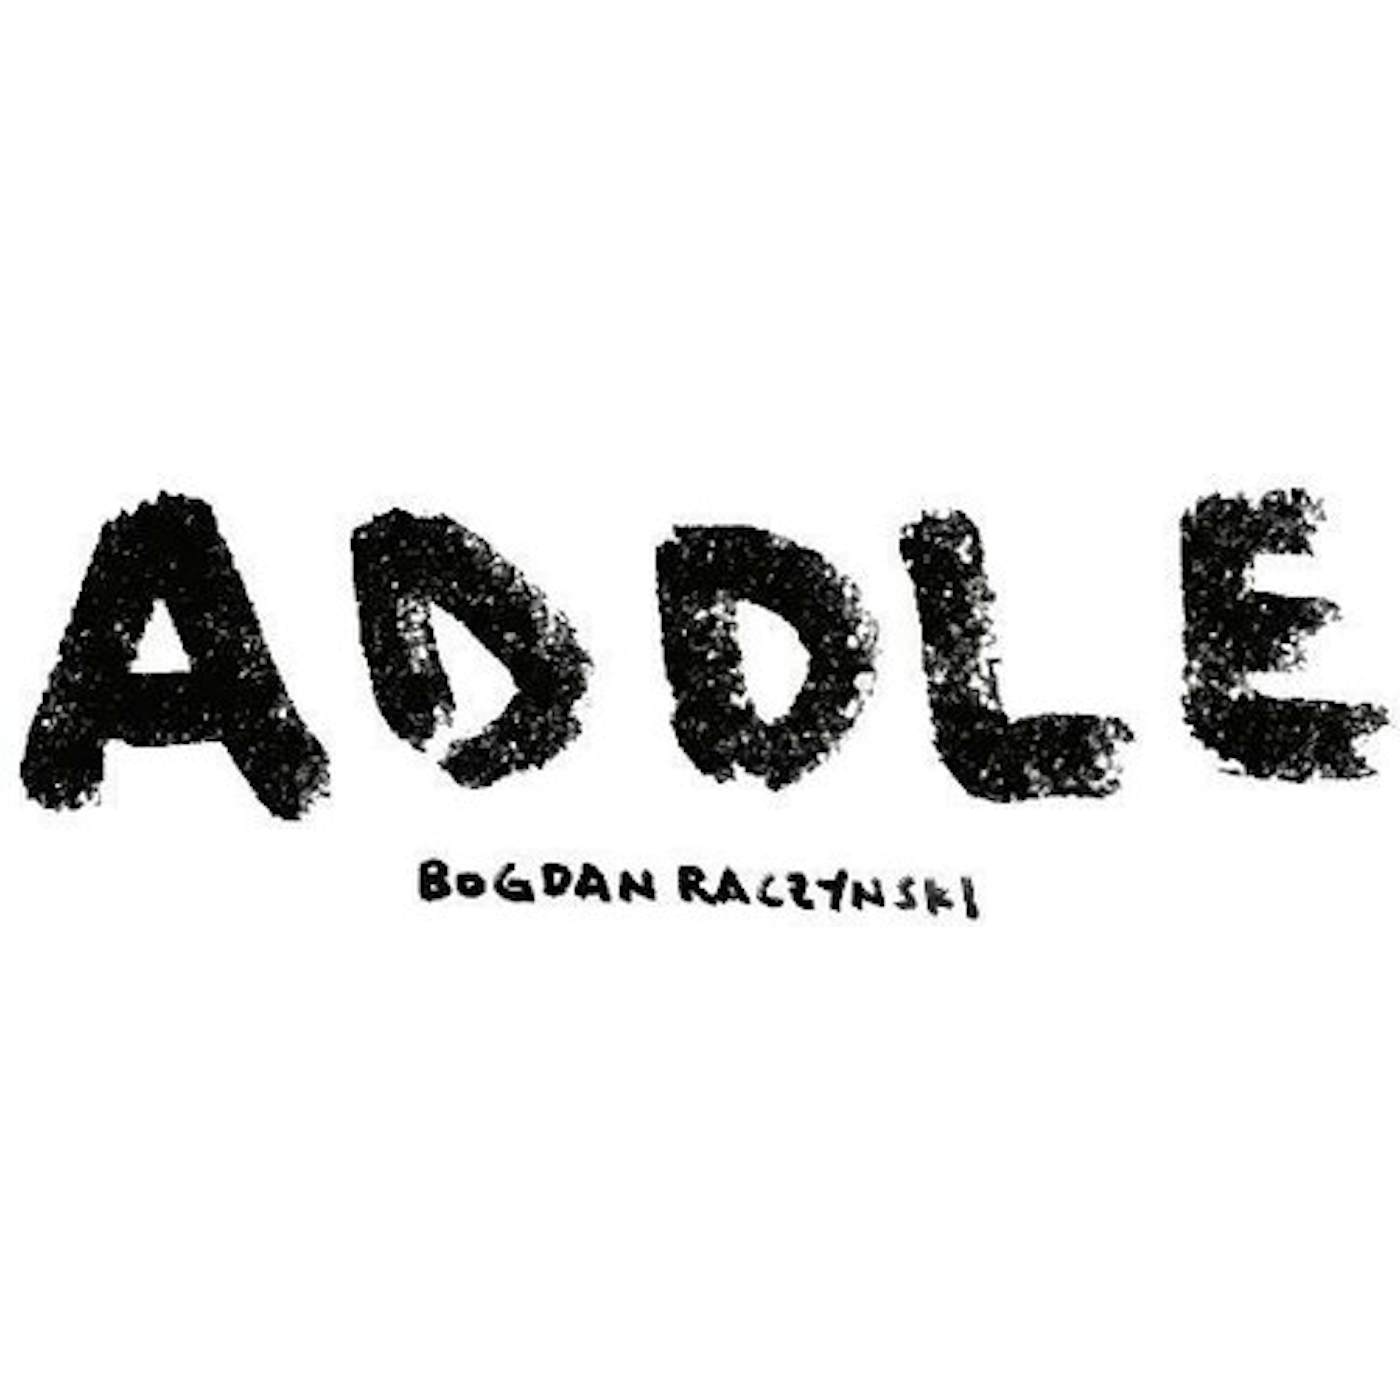 Bogdan Raczynski Addle Vinyl Record